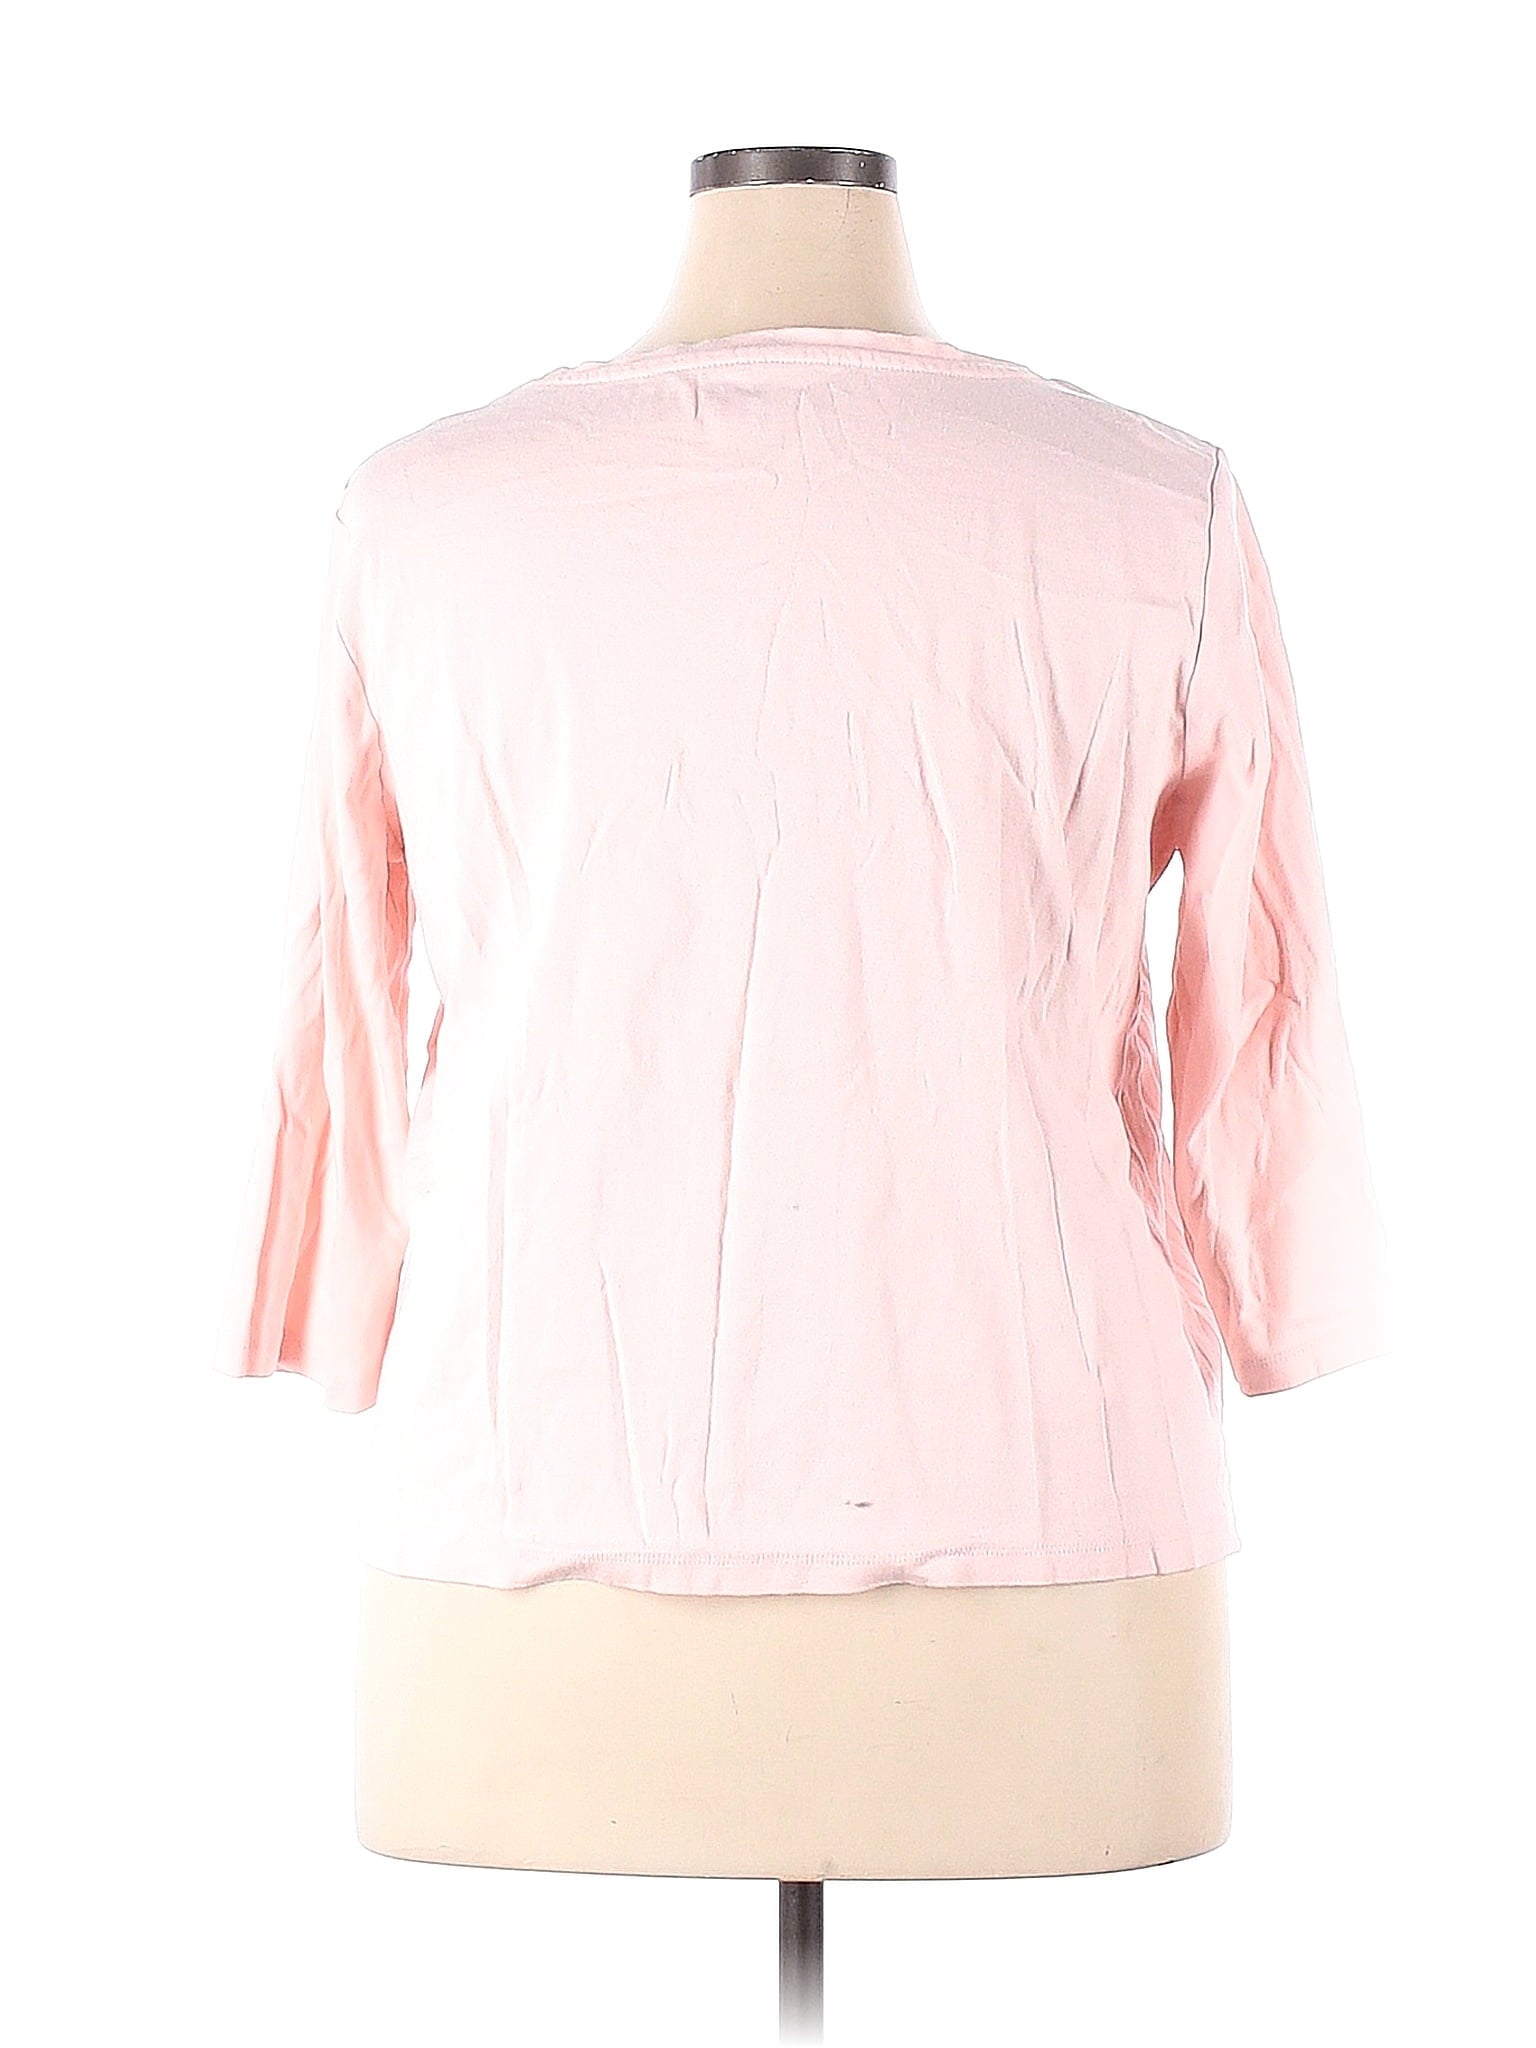 Long Sleeve T Shirt size - 2X W